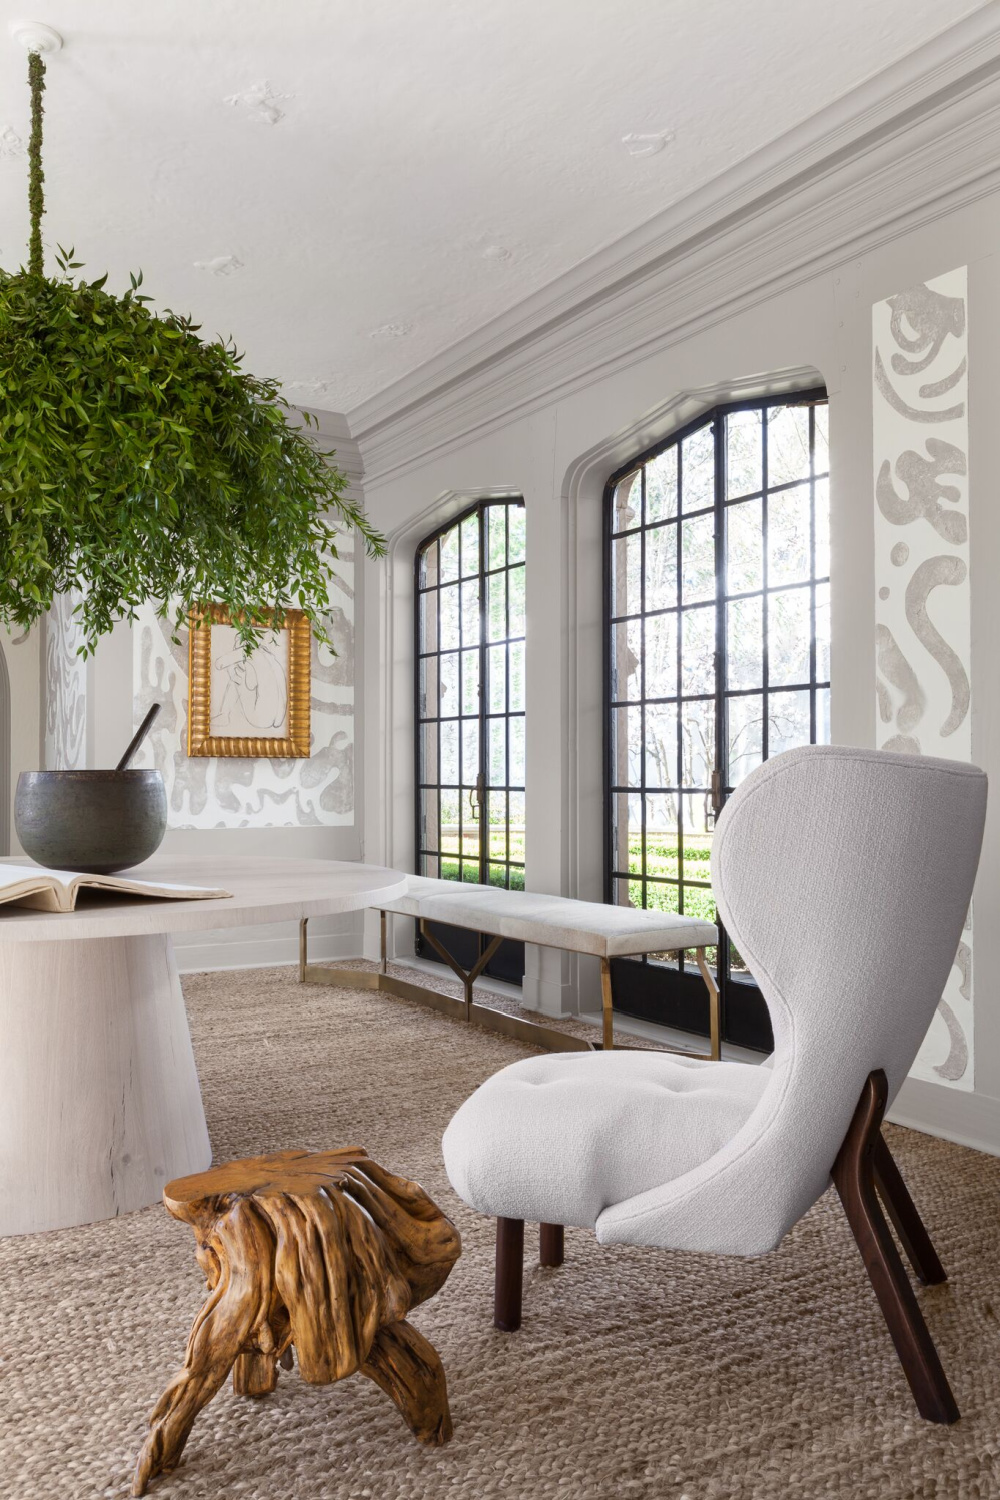 Michael Del Piero global style interior design, modern rustic minimal luxe style. #michaeldelpiero